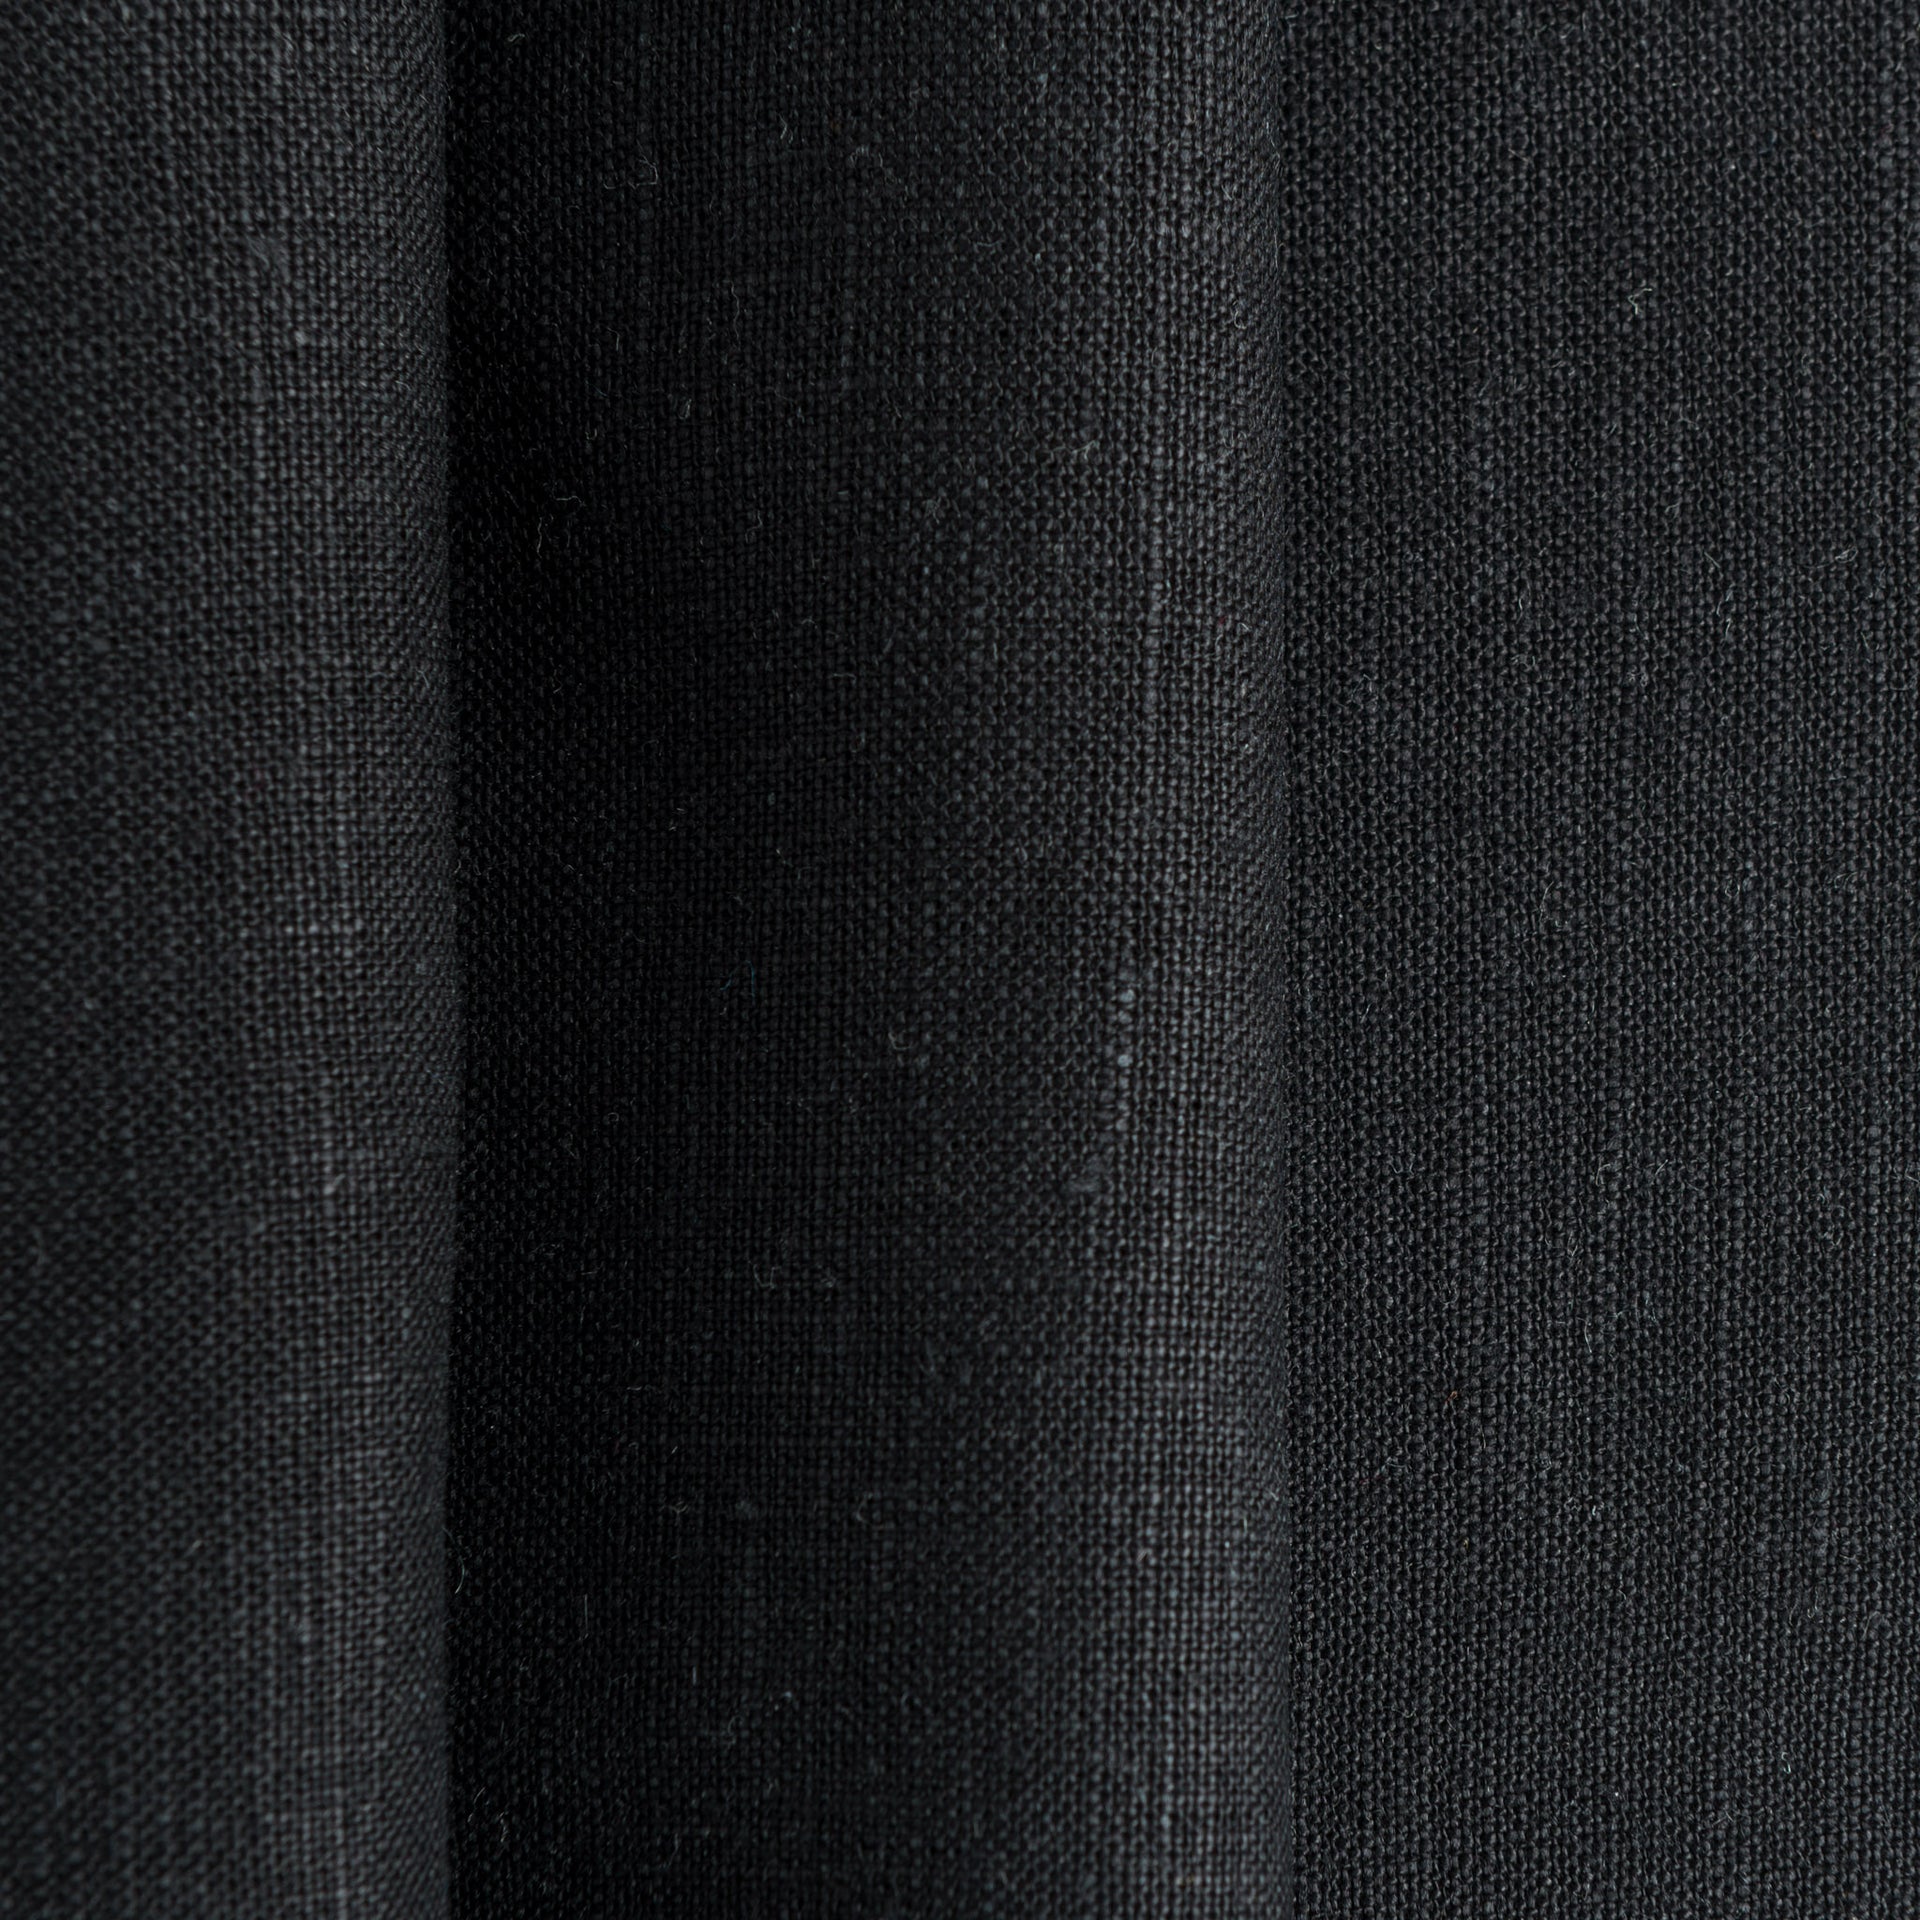 Black and White Frame Border S-Fold Linen Curtain Panel - Custom Width and Length, Color: Black